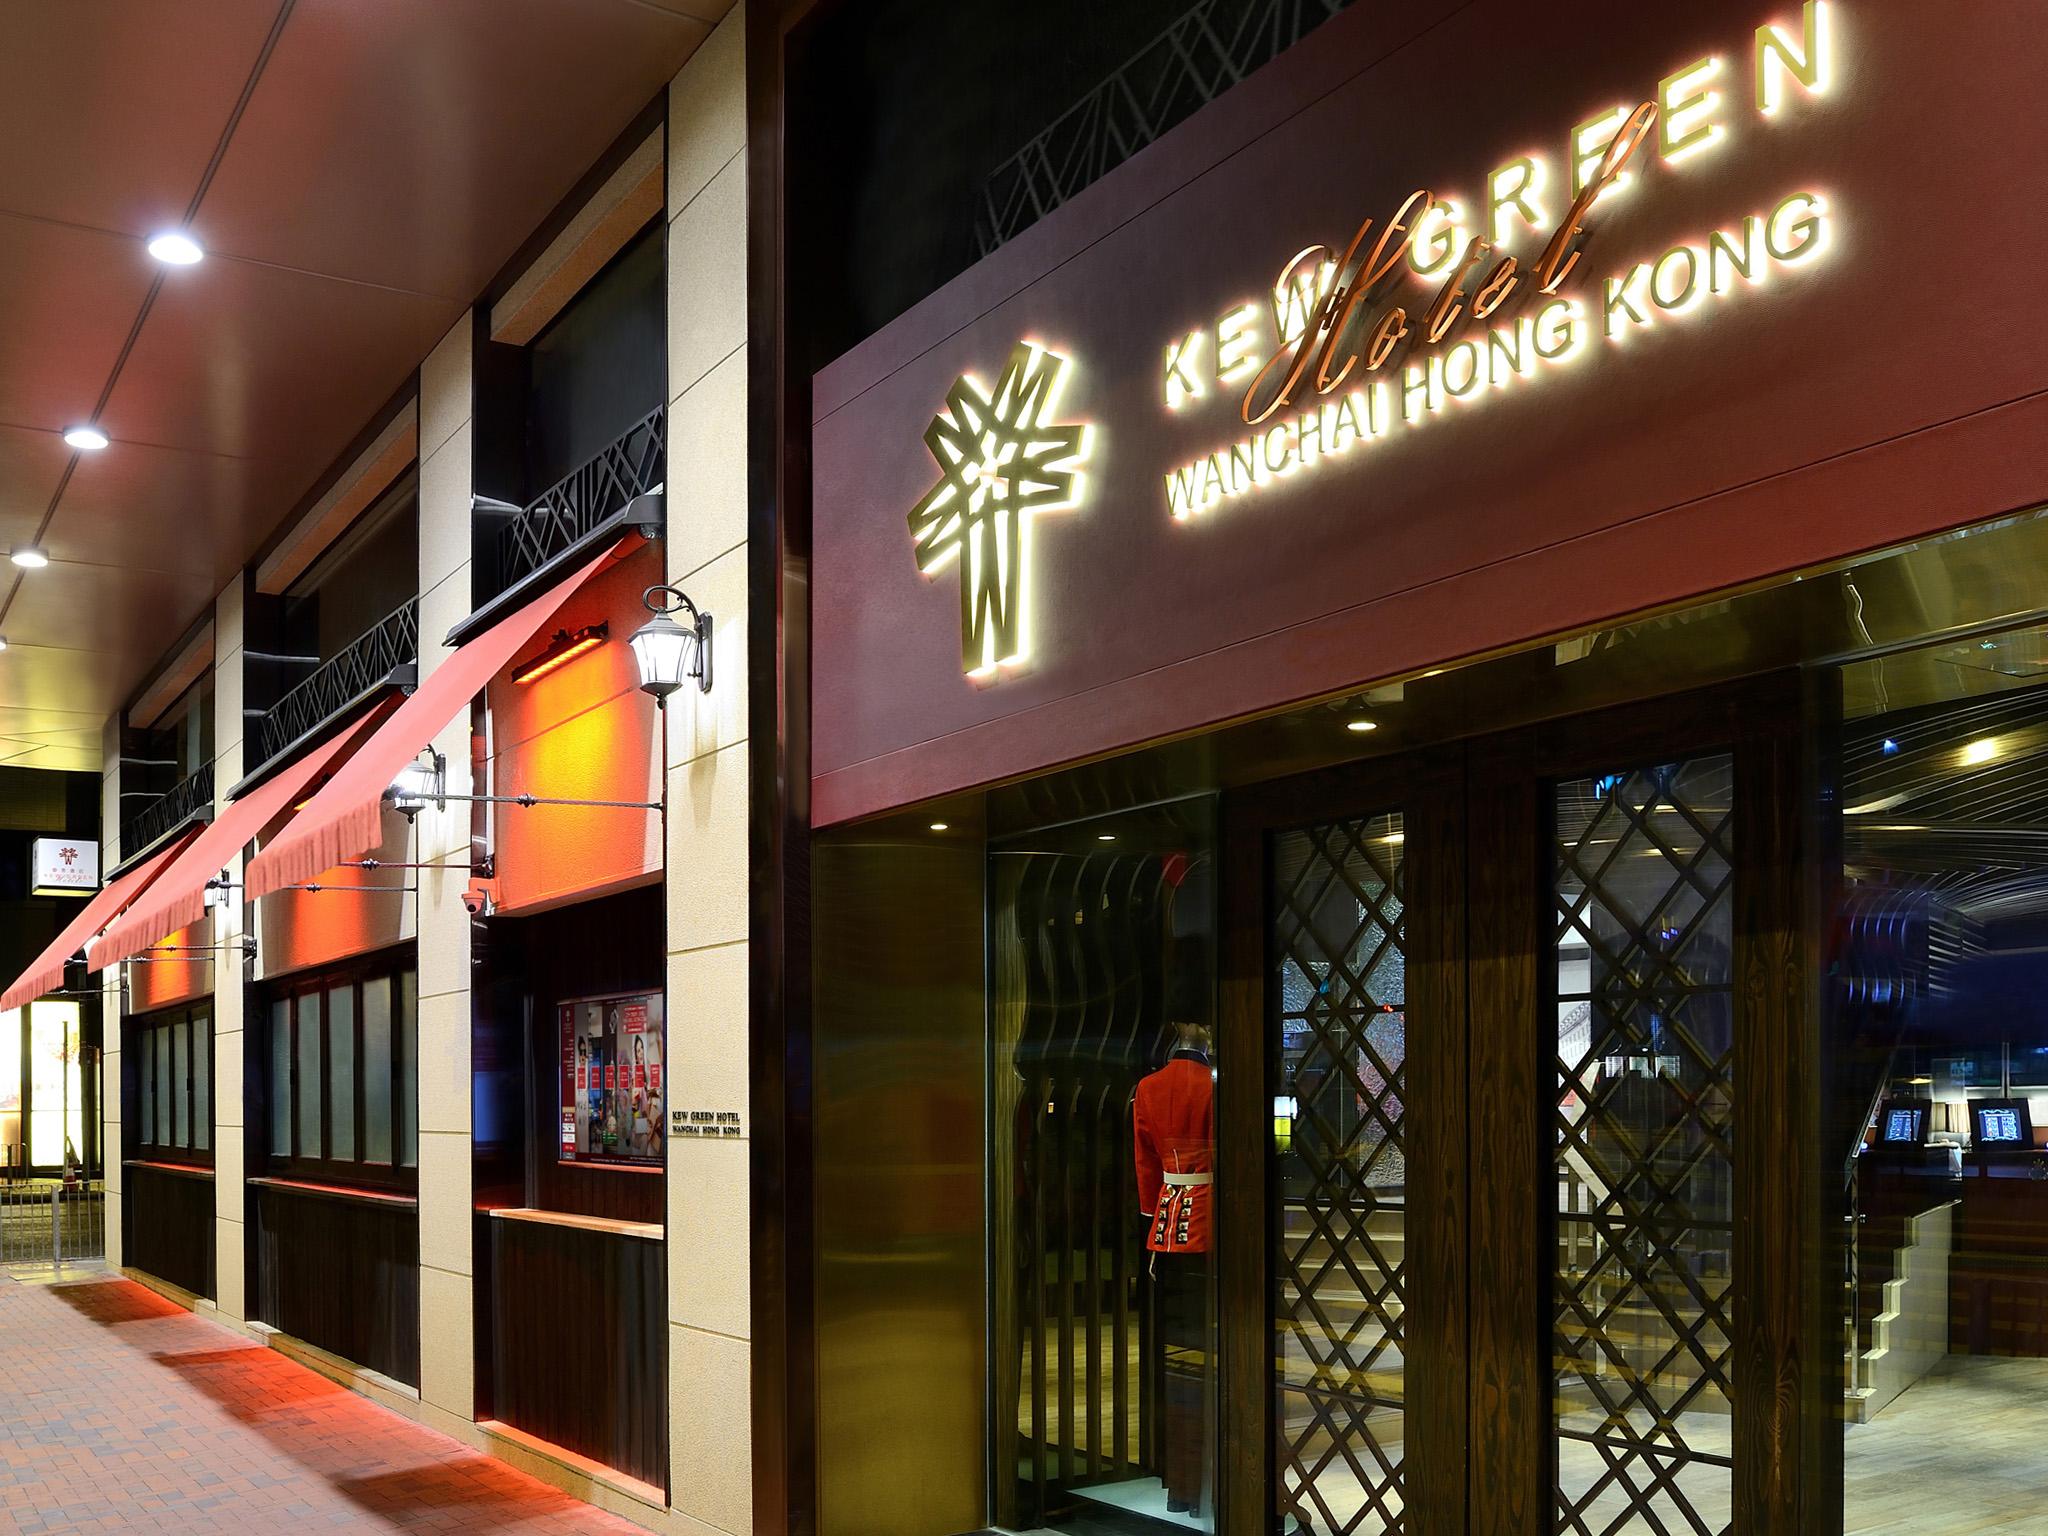 Kew Green Hotel Wanchai Hong Kong Exterior photo